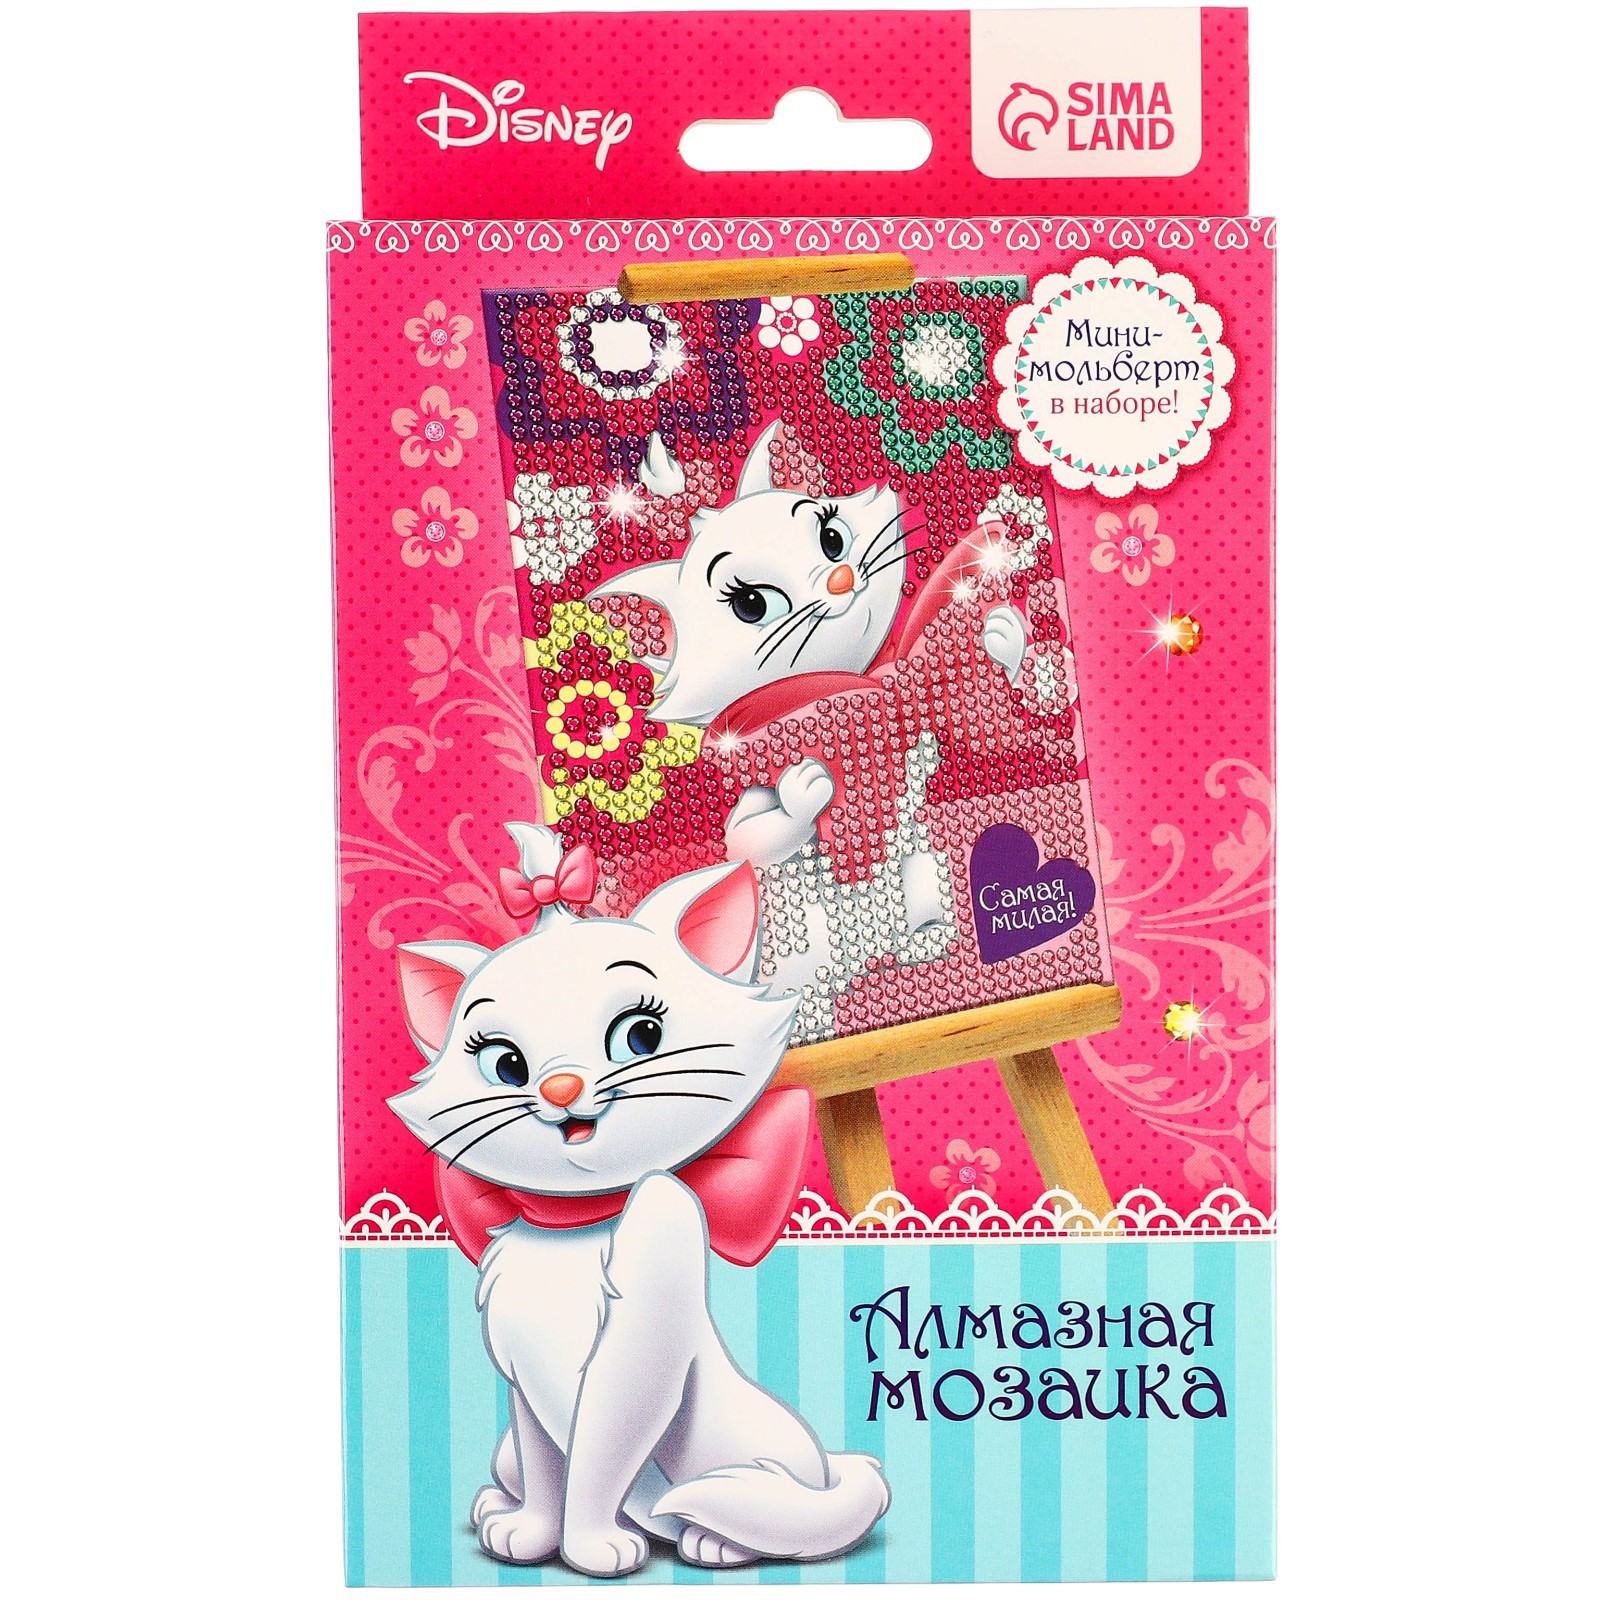 Алмазная вышивка Disney для детей Самая милая!, Коты аристократы (2873971)